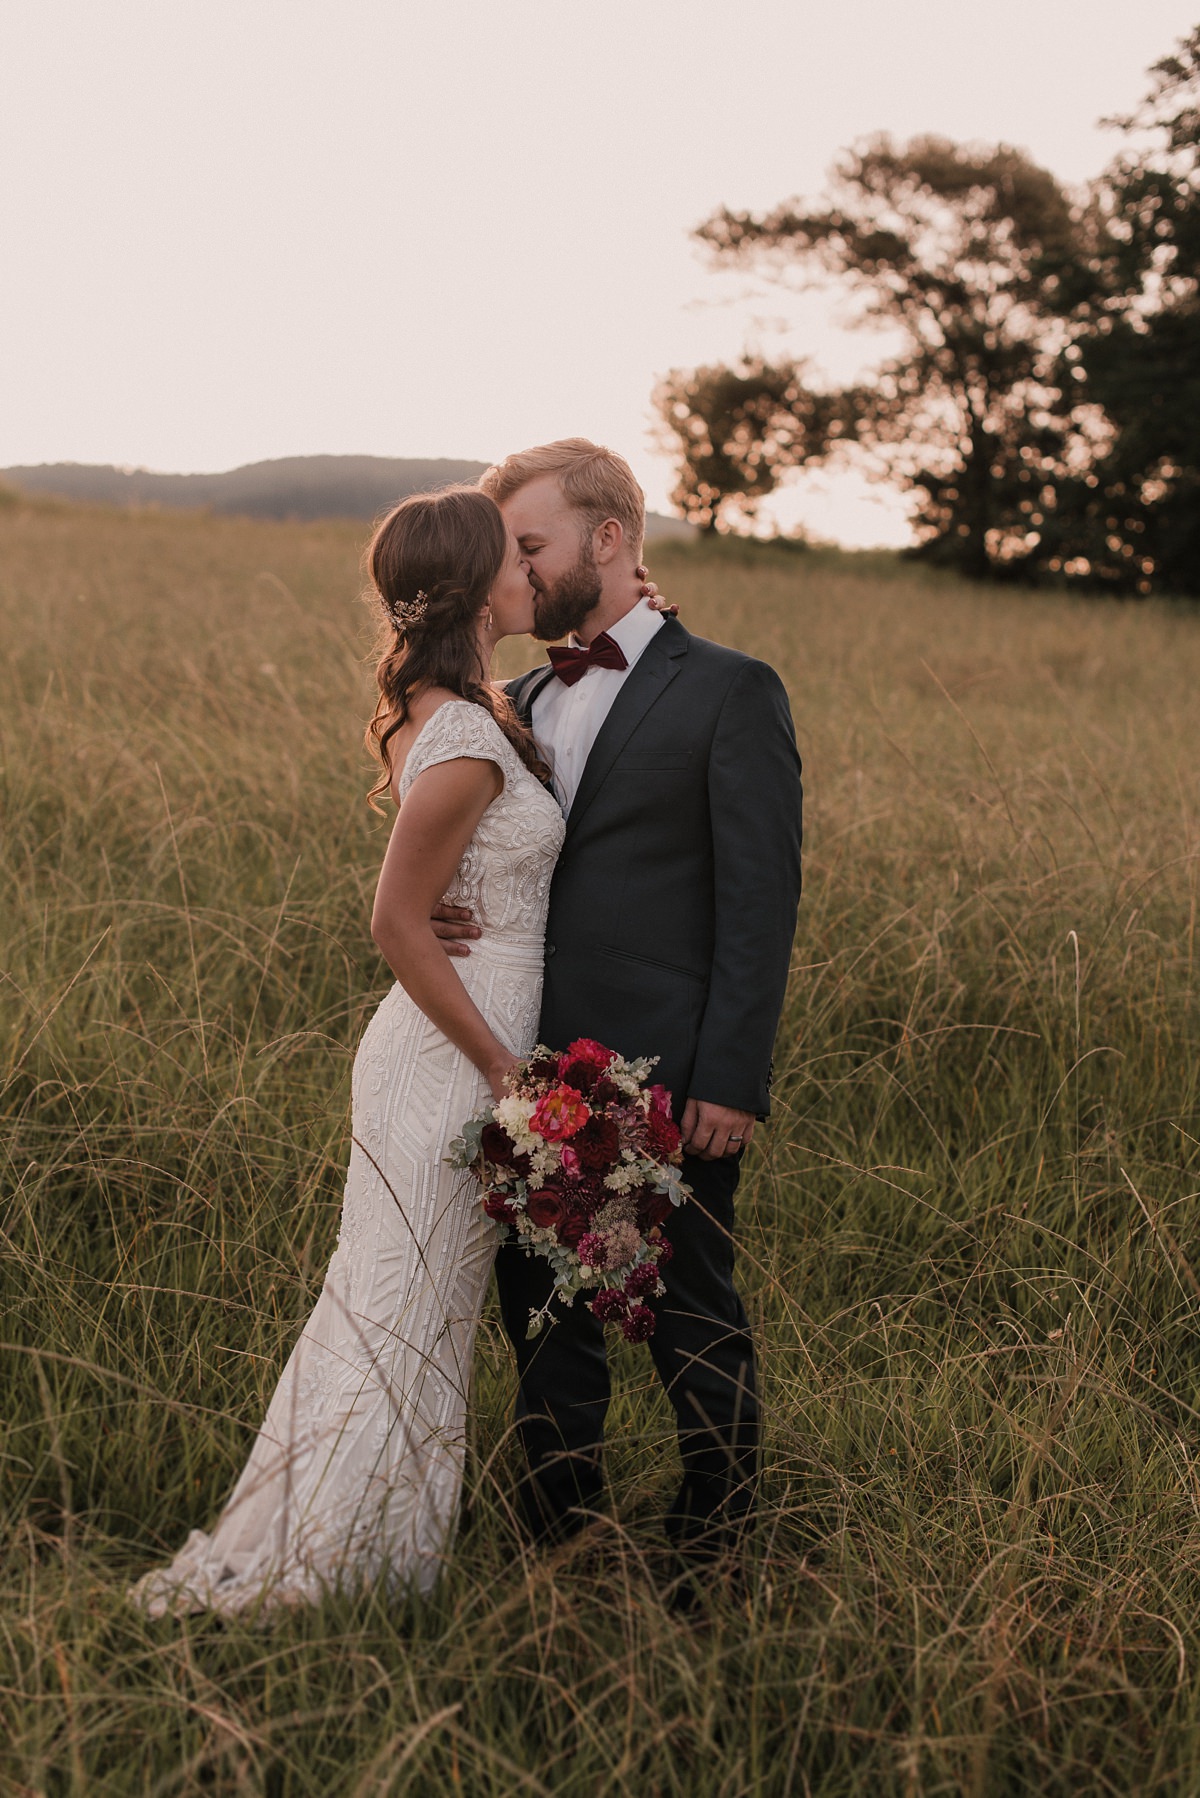 Midlands Wedding // Kim Tracey Photography